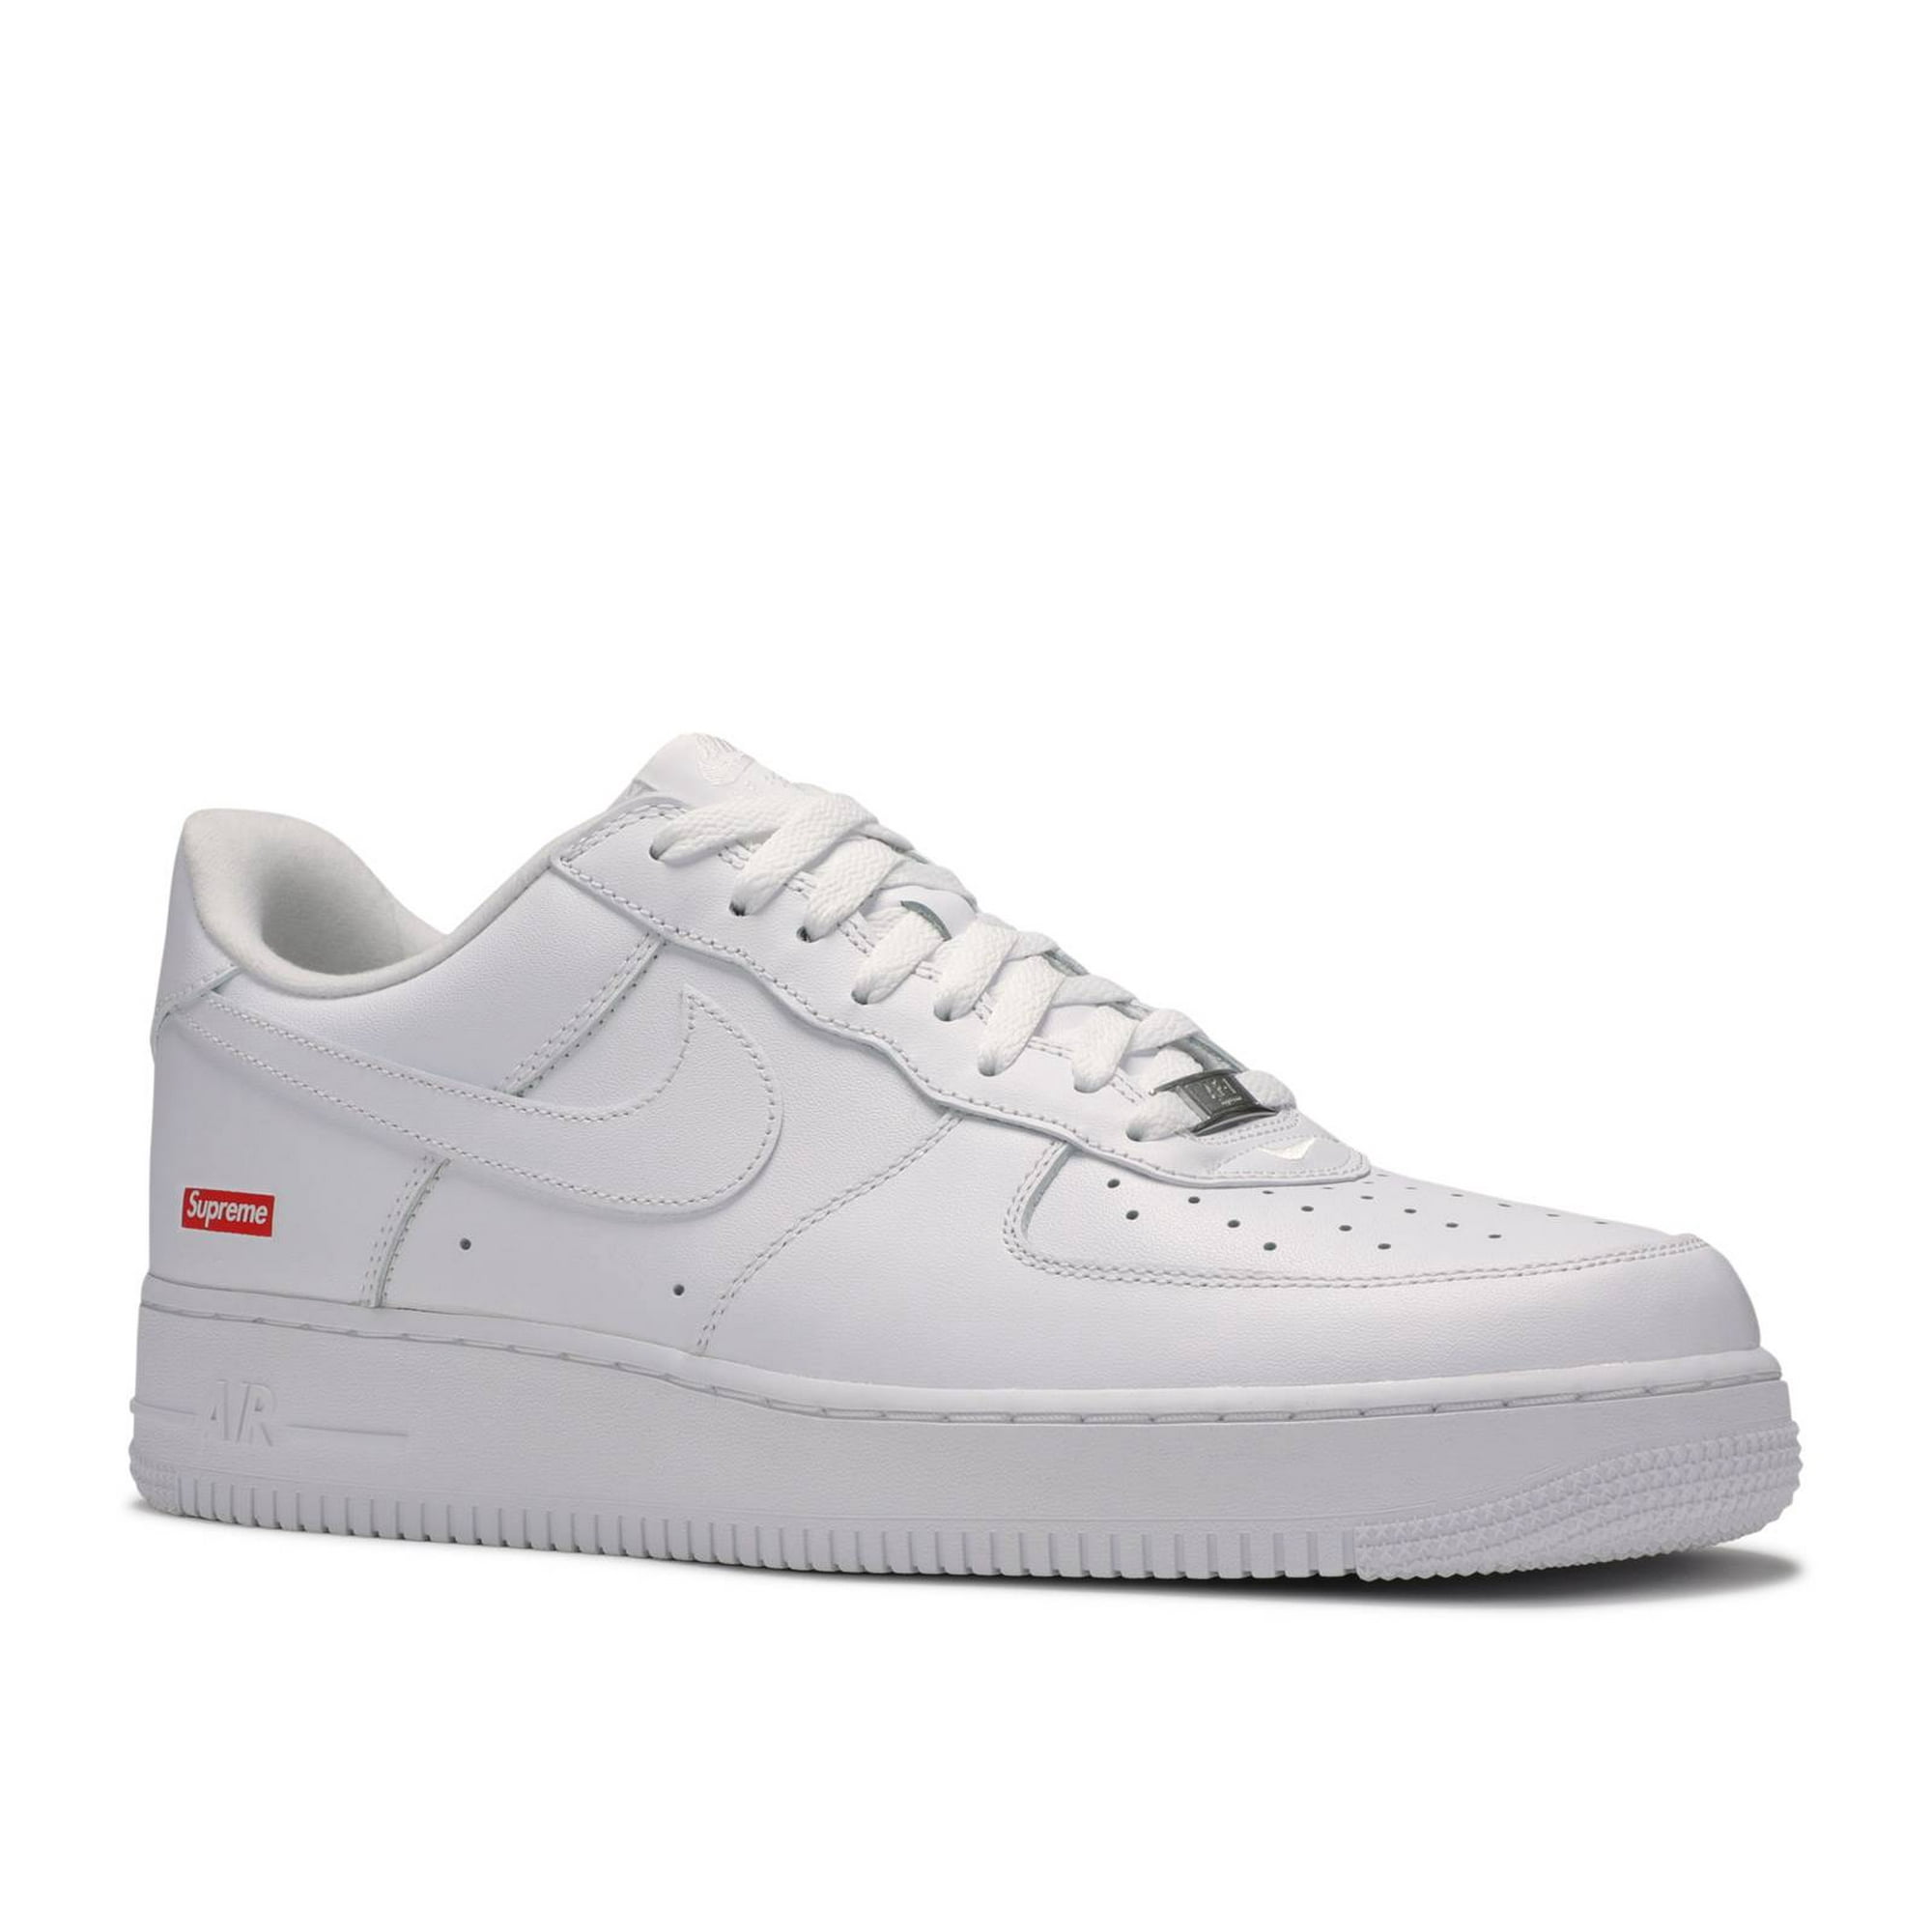 Nike Air Force 1 Low Supreme Triple White CU9225-100 Fashion Shoes